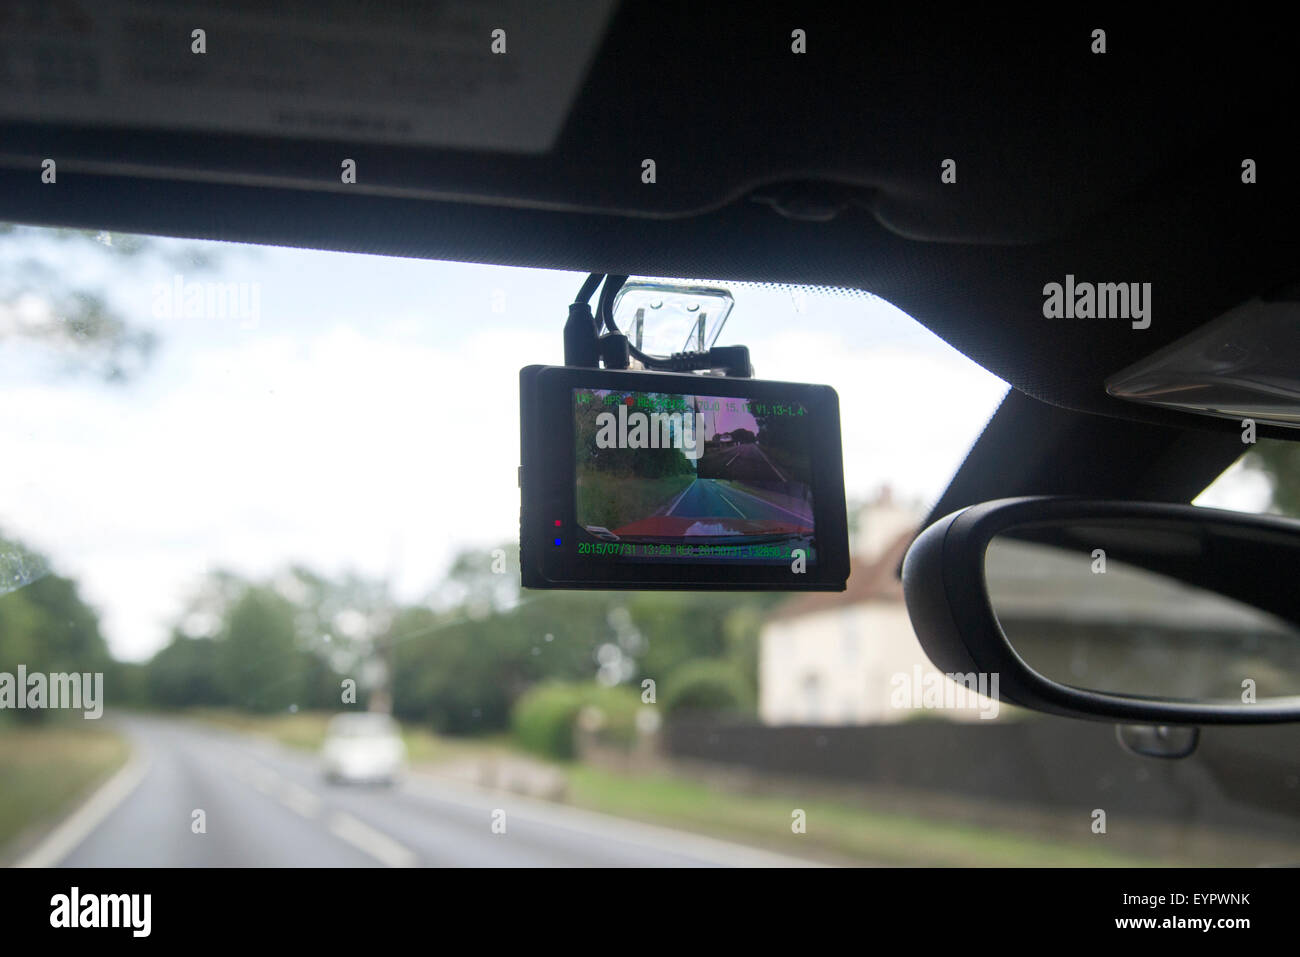 https://c8.alamy.com/comp/EYPWNK/dashcam-car-windscreen-video-camera-EYPWNK.jpg